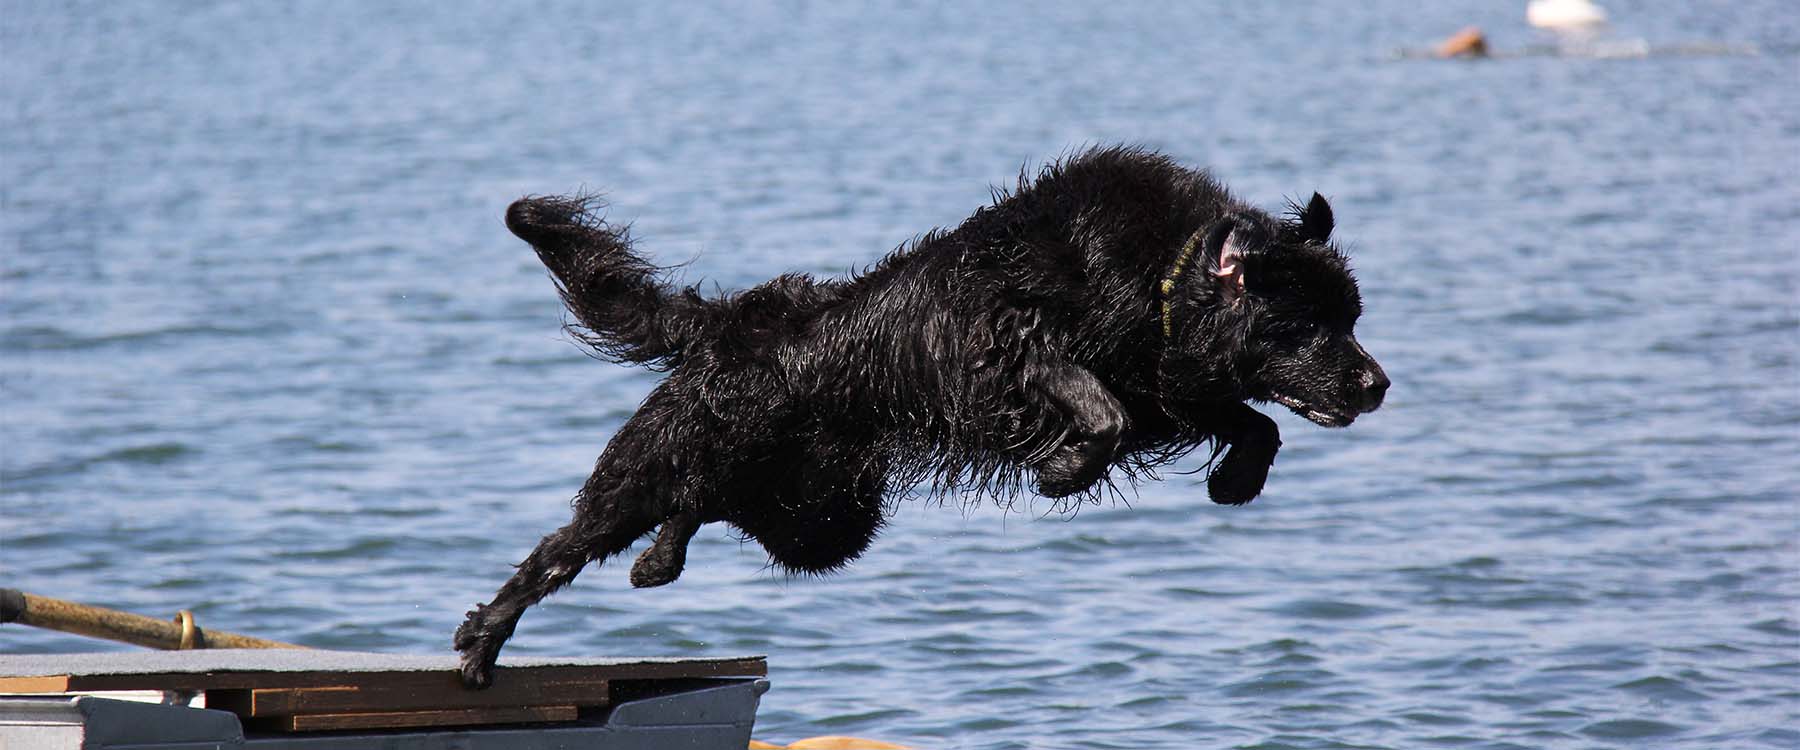 newfoundland_dog_barney_shapiro_jumping_into_water